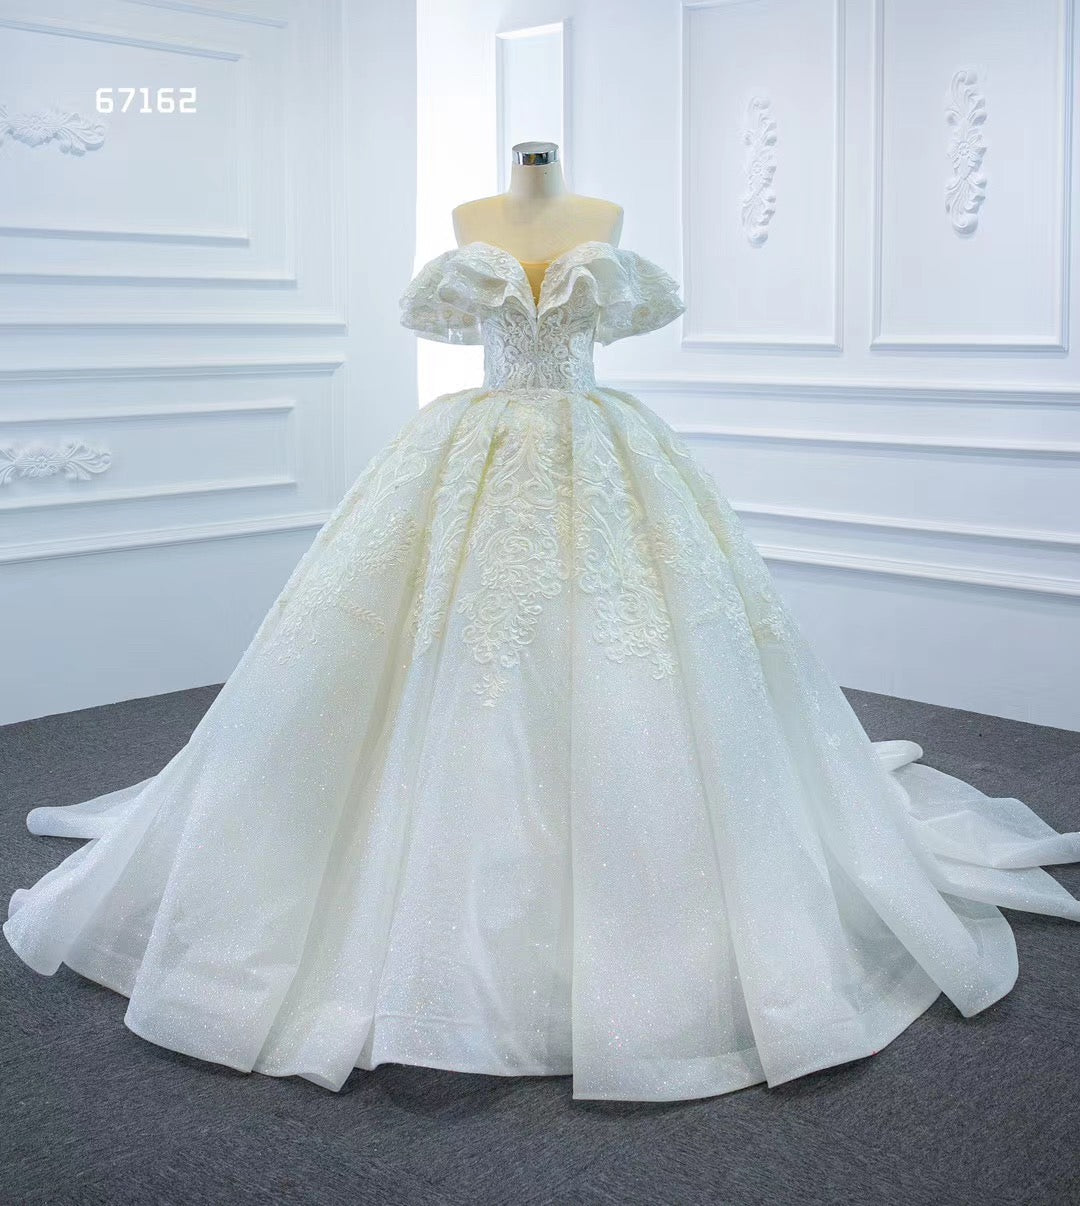 Gorgeous Dream Wedding Dress - FashionByTeresa